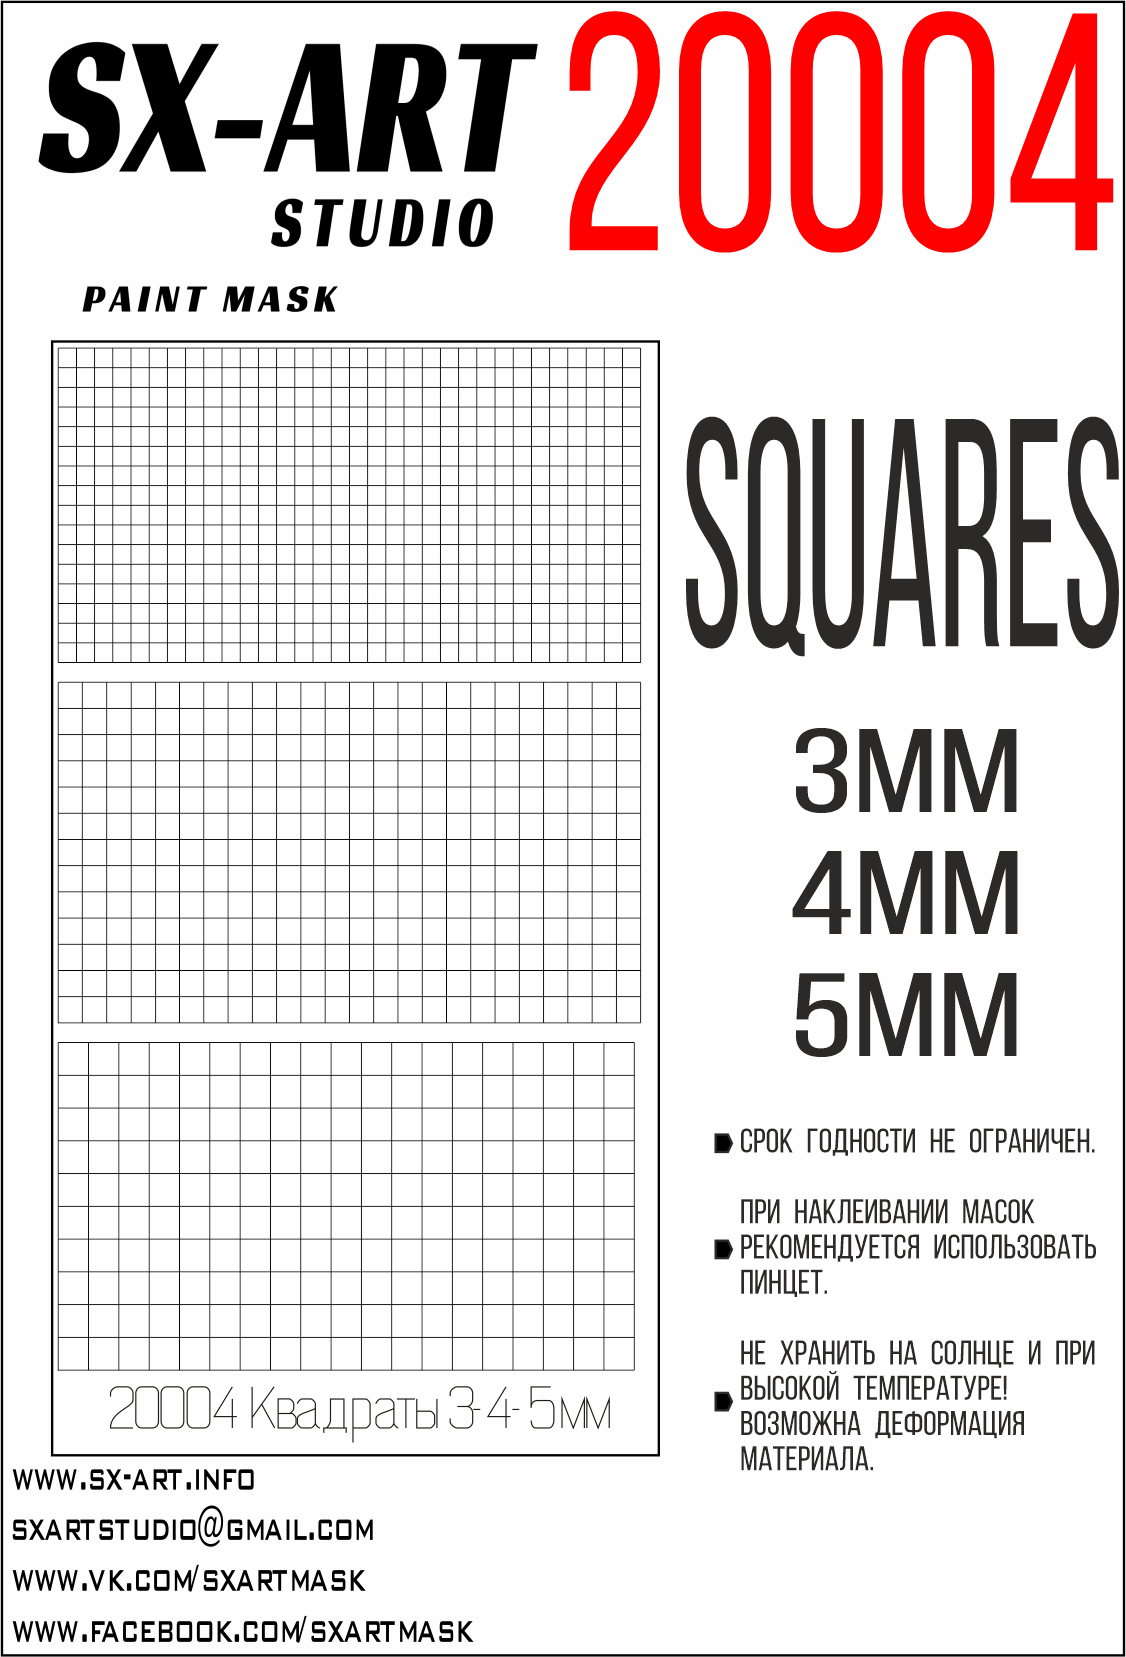 Paint mask Squares (digital camouflage) 3mm, 4mm, 5mm (SX-Art)